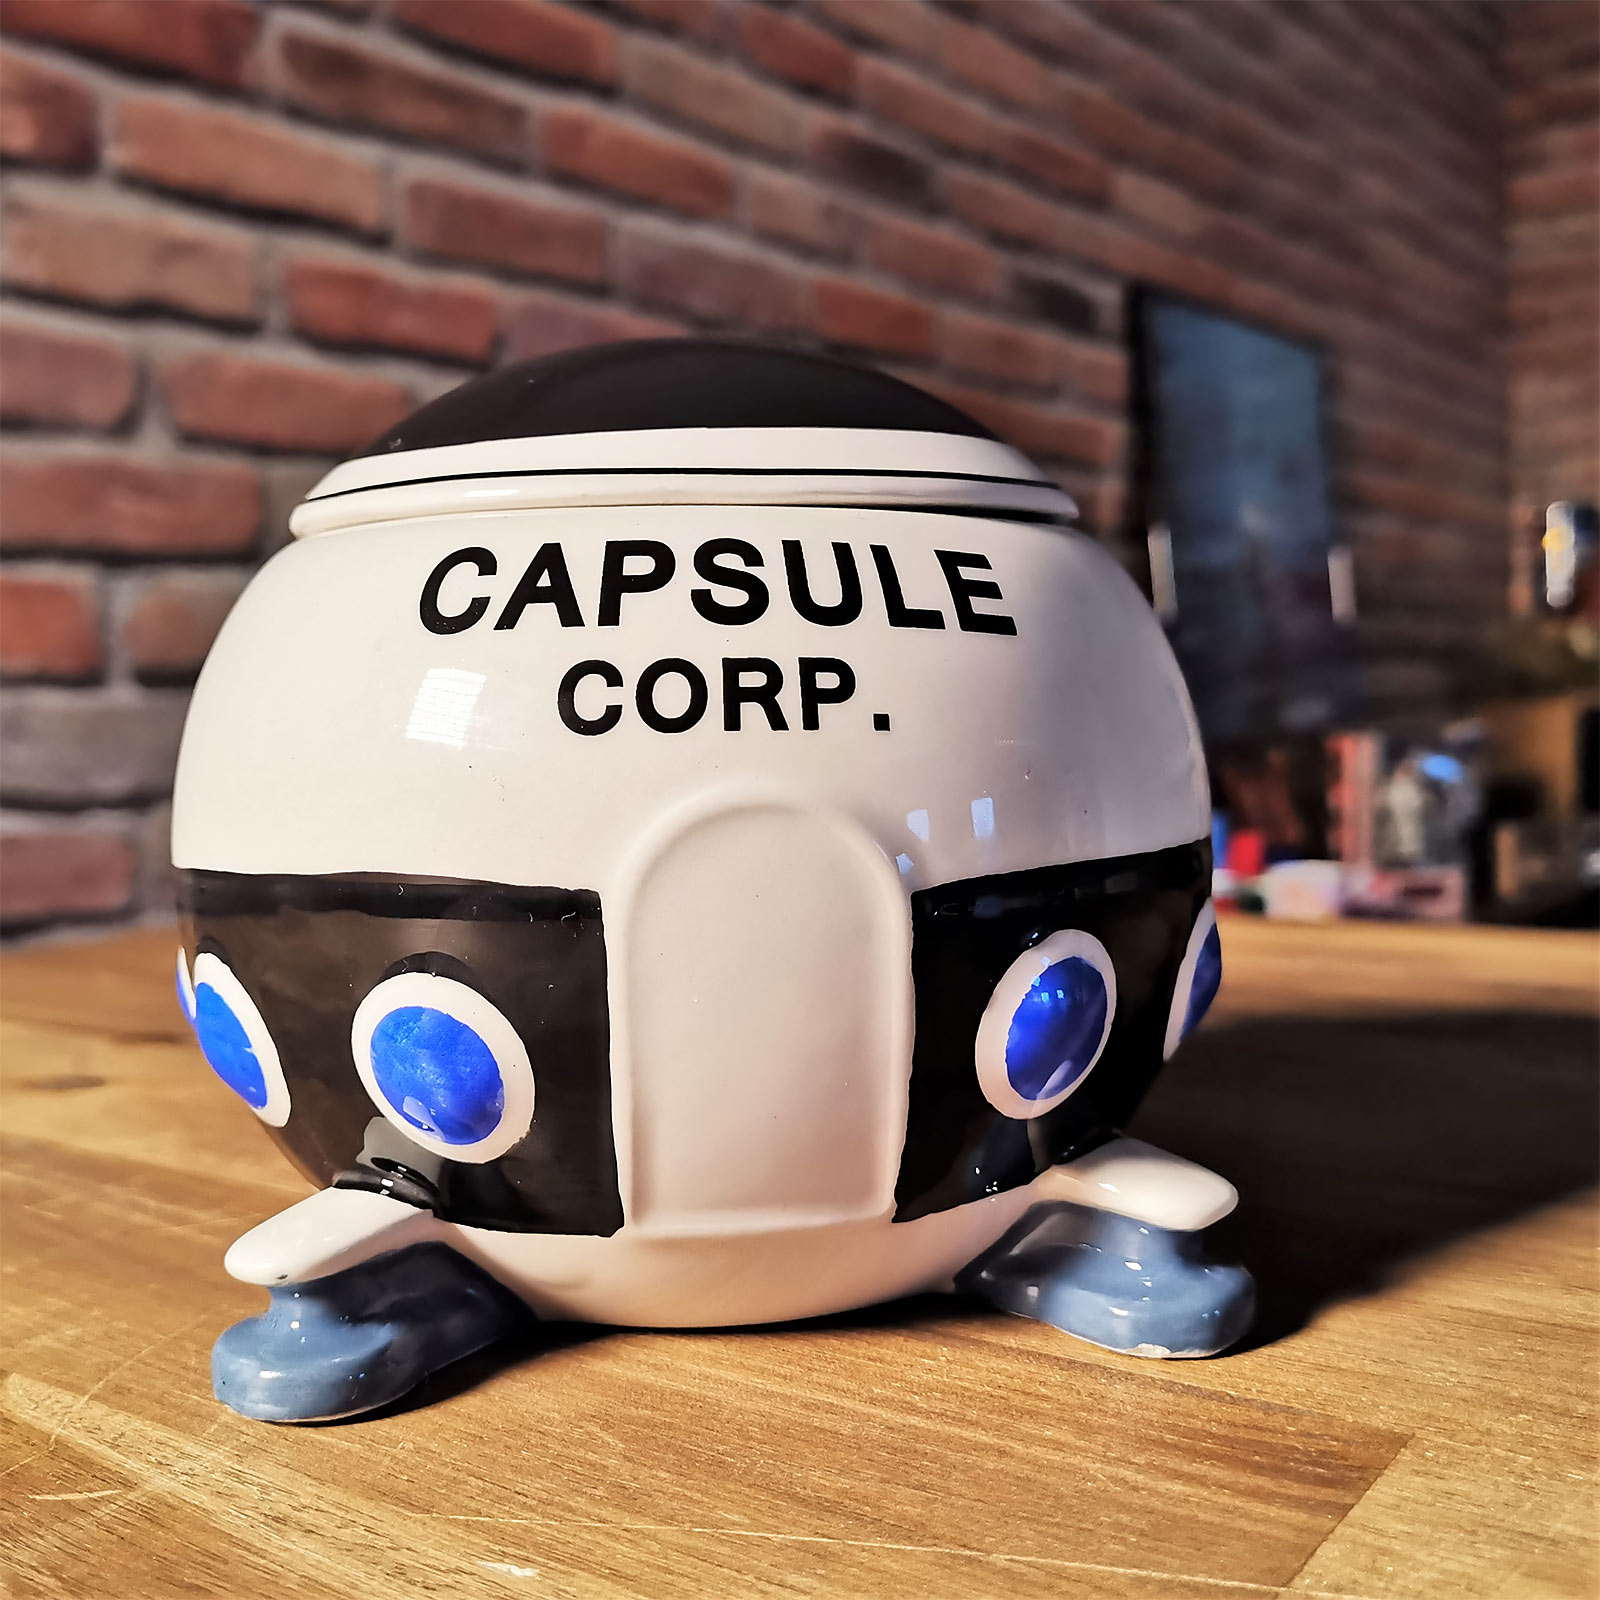 Dragon Ball - Capsule Corp. Spaceship 3D Tasse mit Deckel